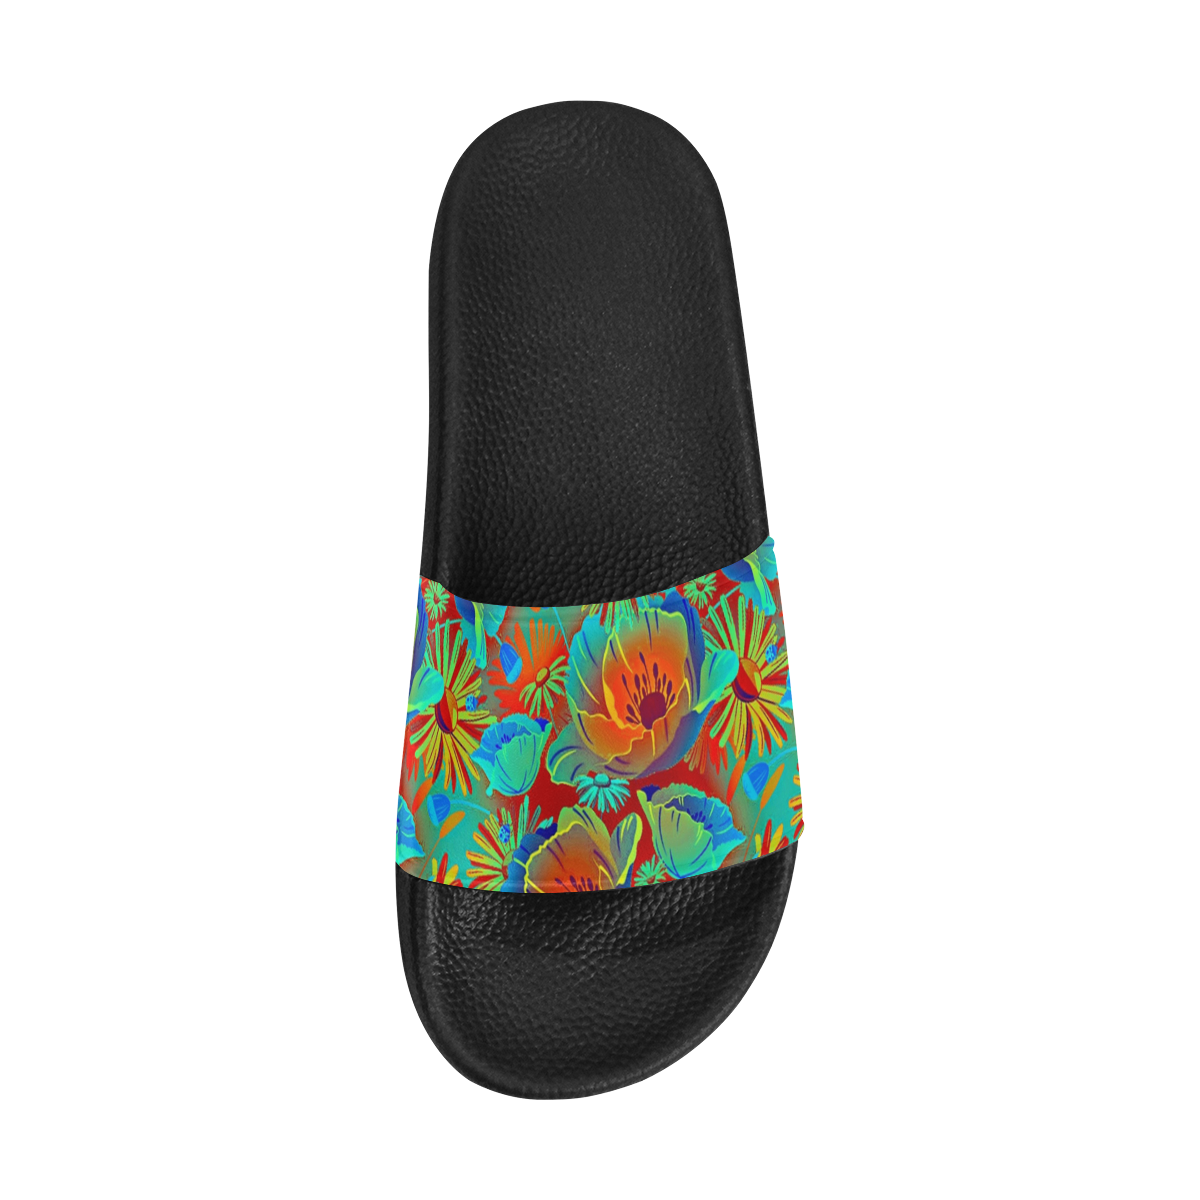 bright tropical floral Women's Slide Sandals (Model 057)